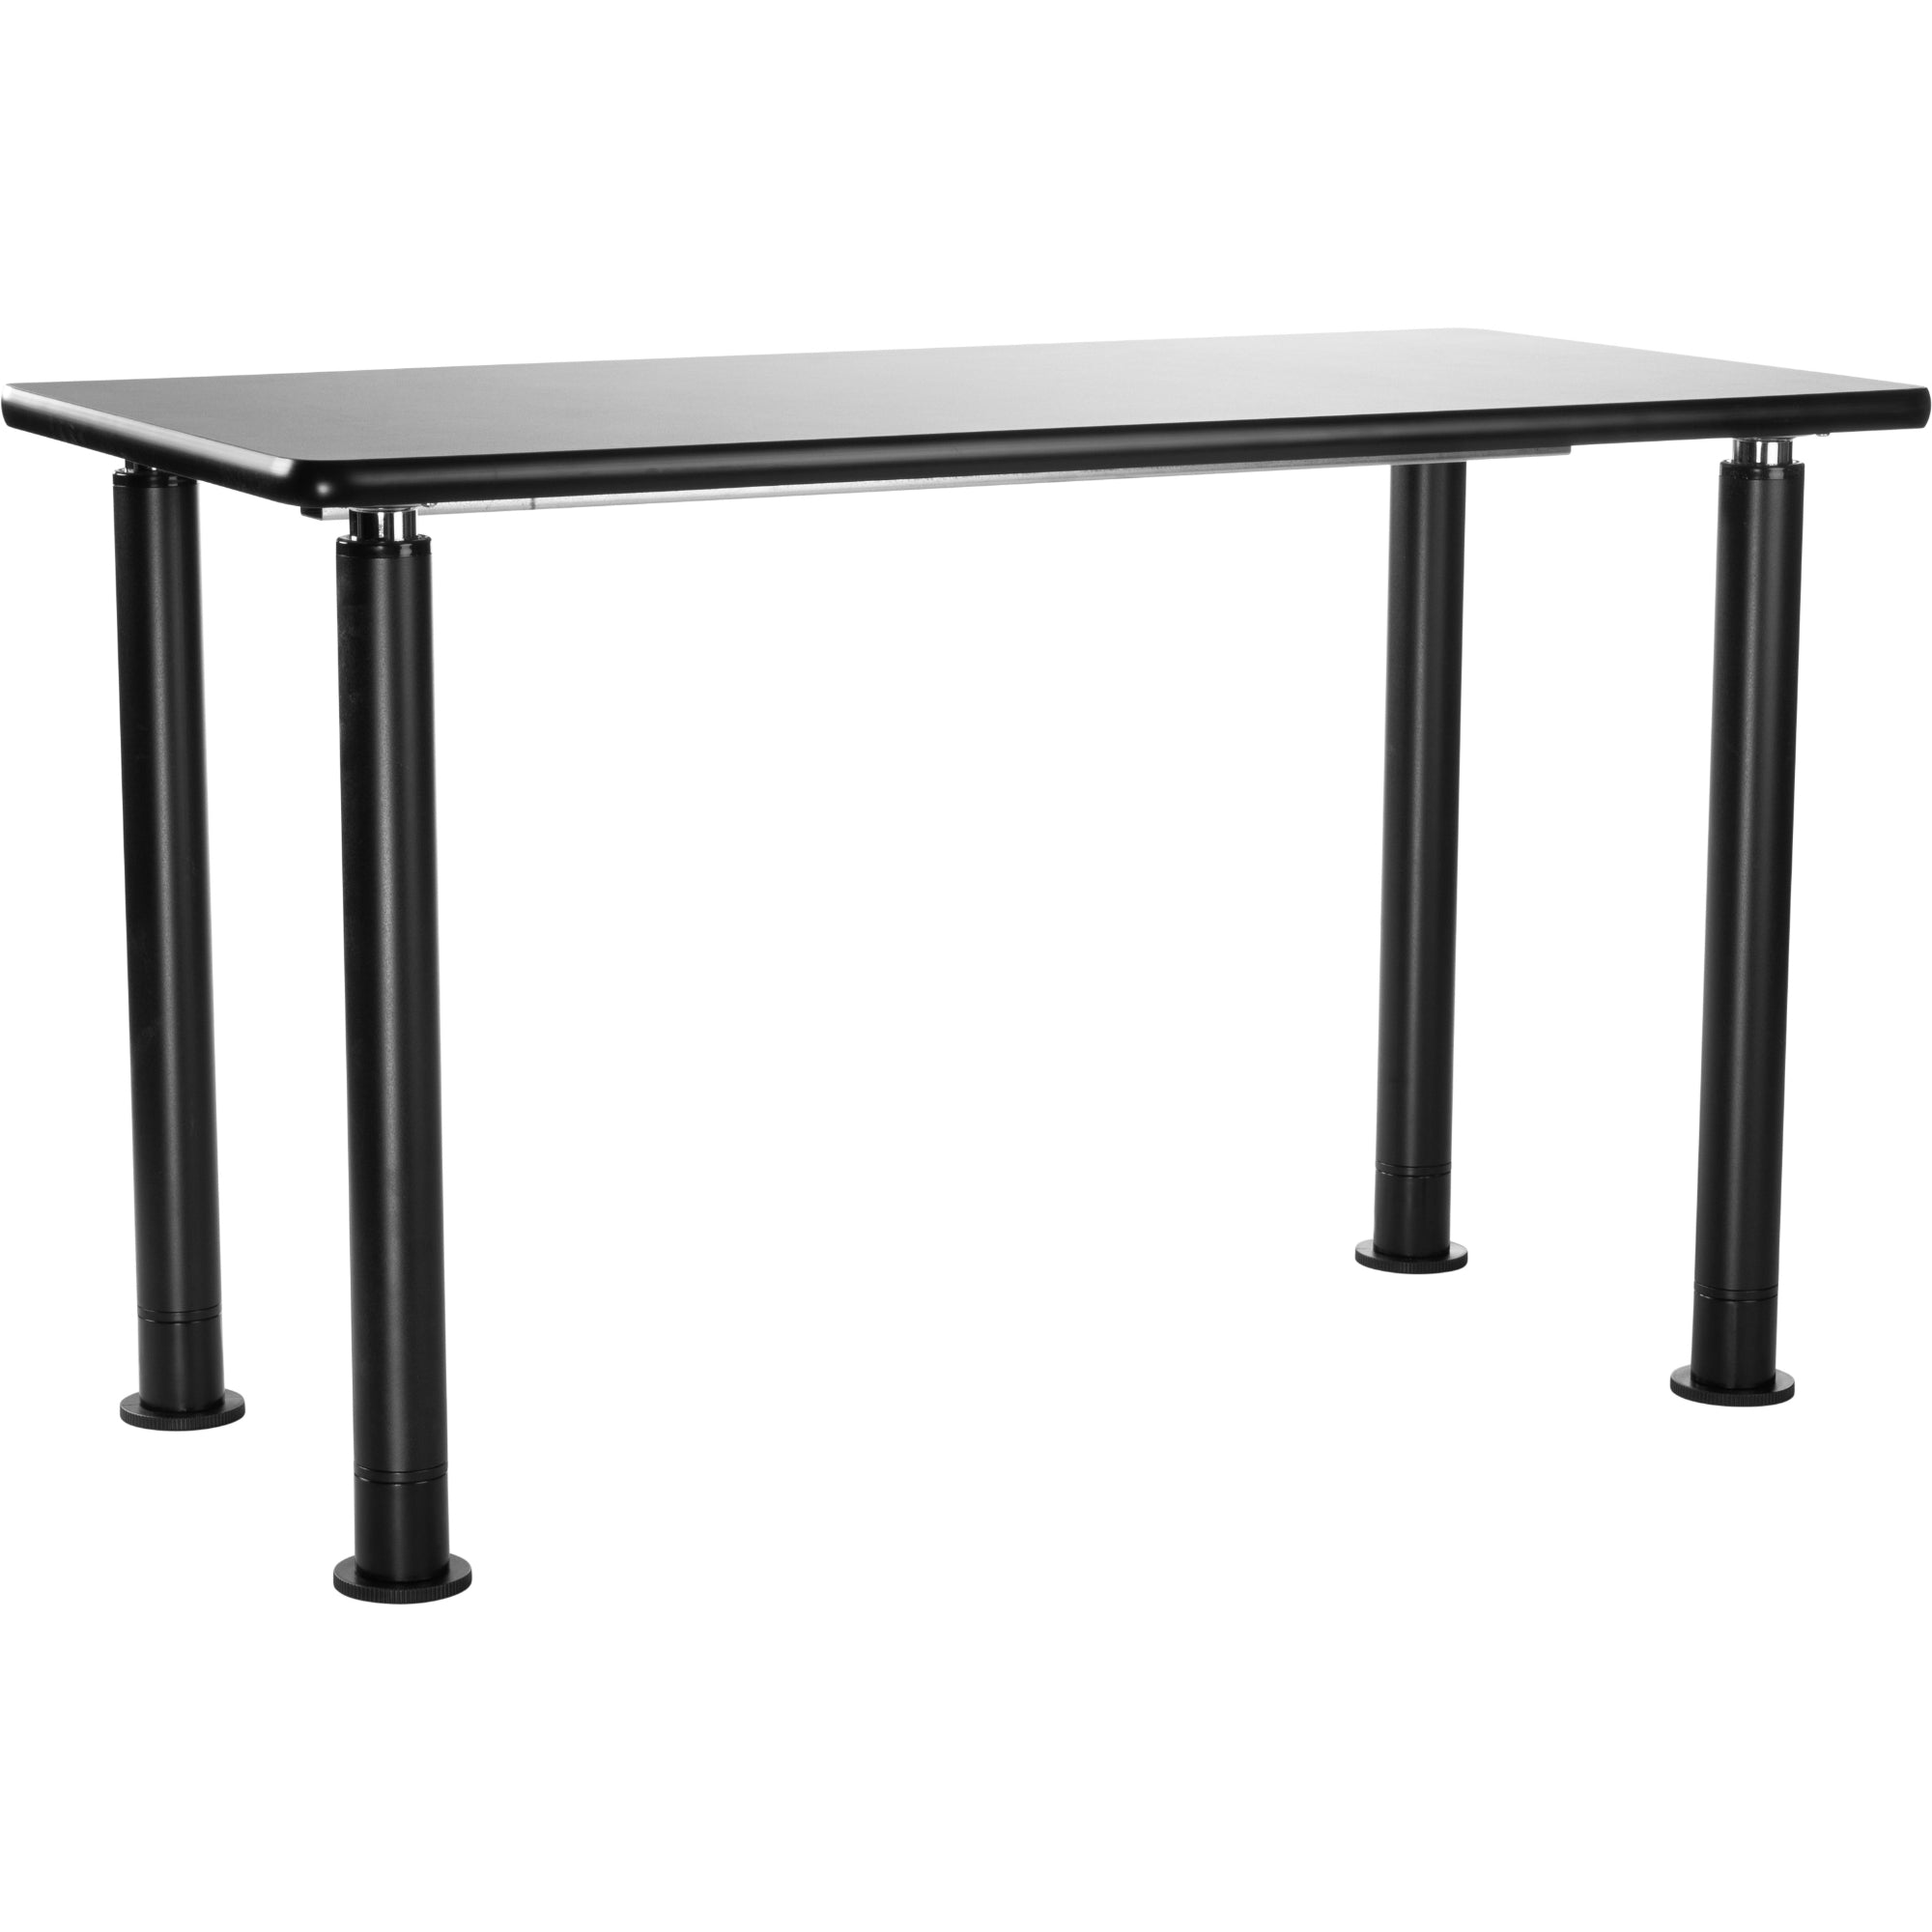 Designer Series Adjustable Height Science Table, 24" x 60" x 27"-42" H, High Pressure Laminate Top